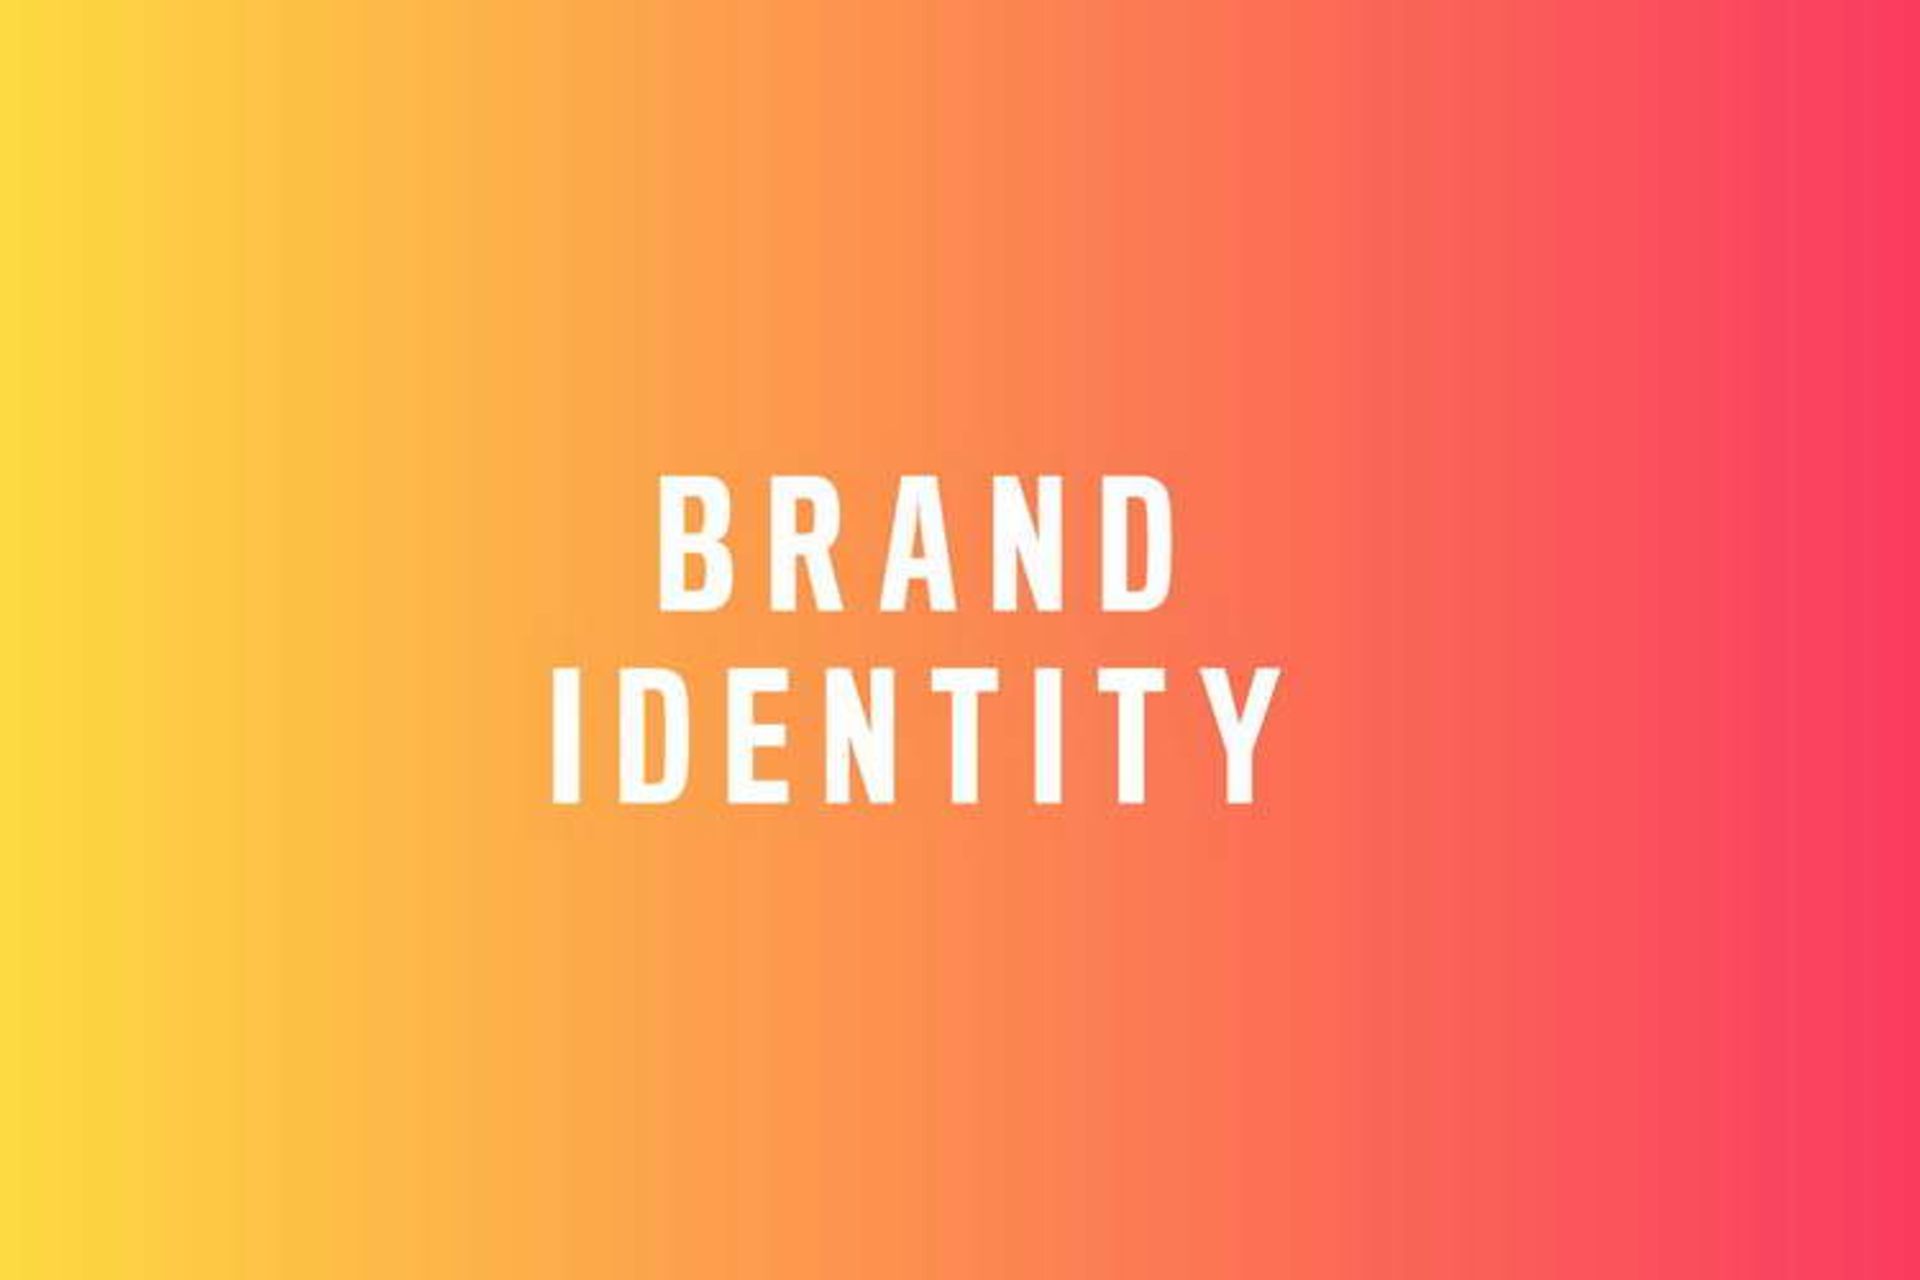  Brand Identity